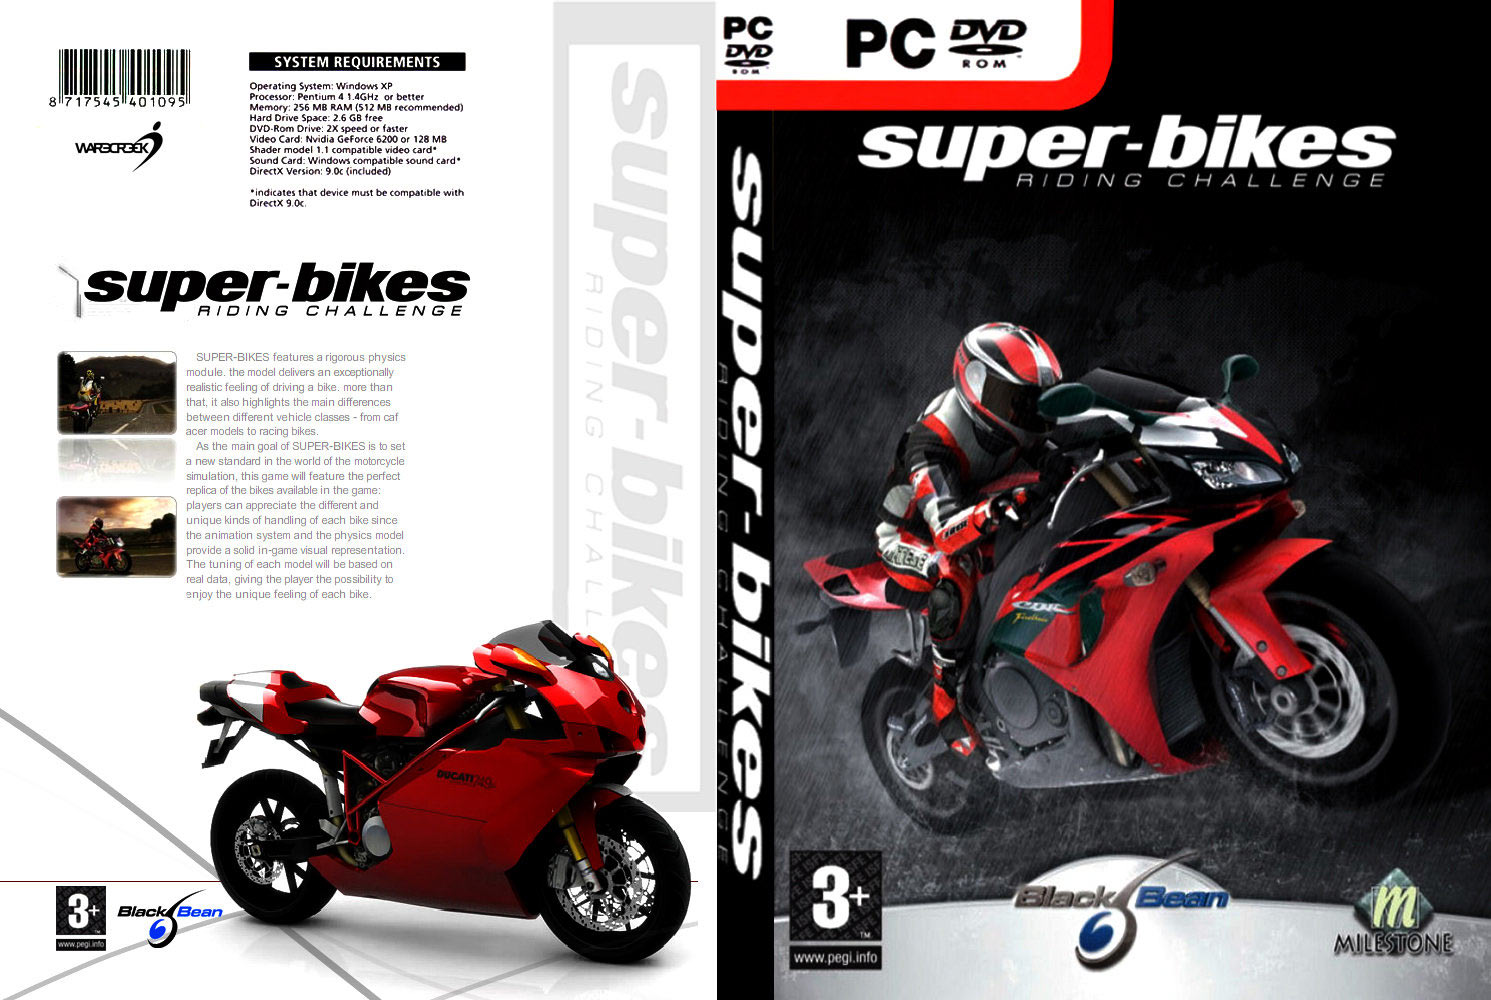 Super-Bikes: Riding Challenge - DVD obal